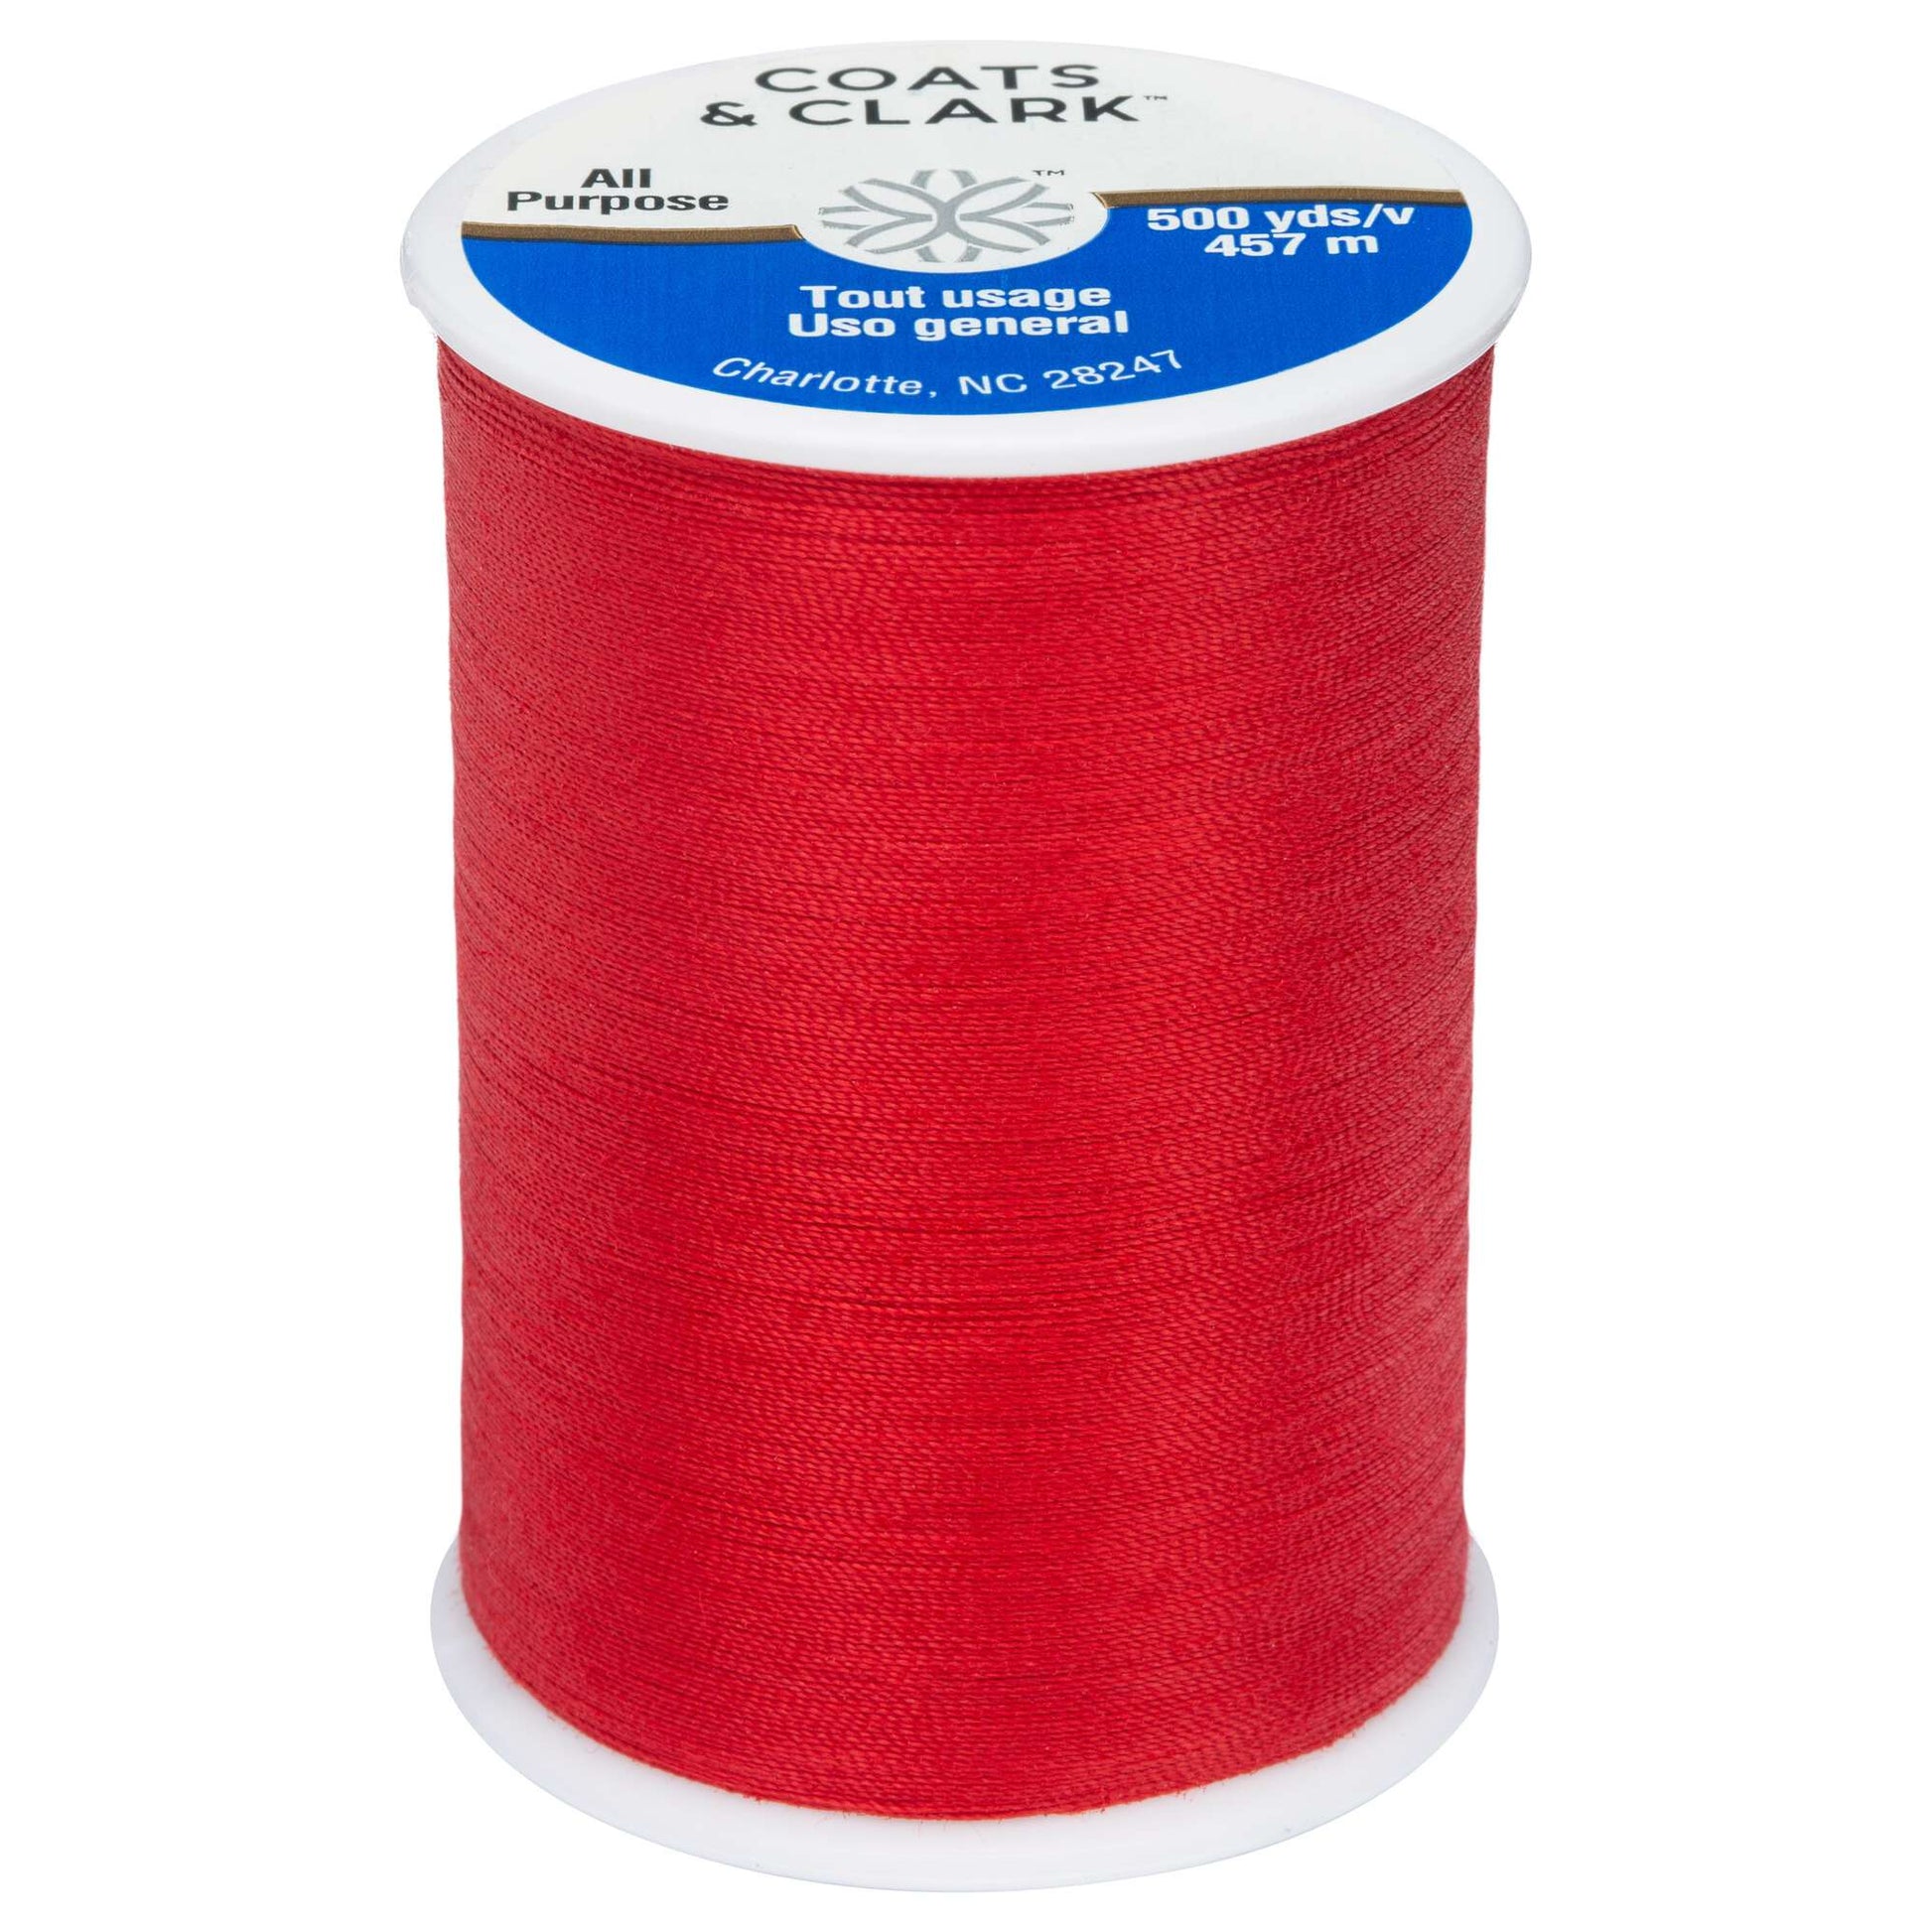 Coats & Clark All Purpose Thread (500 Yards) Red